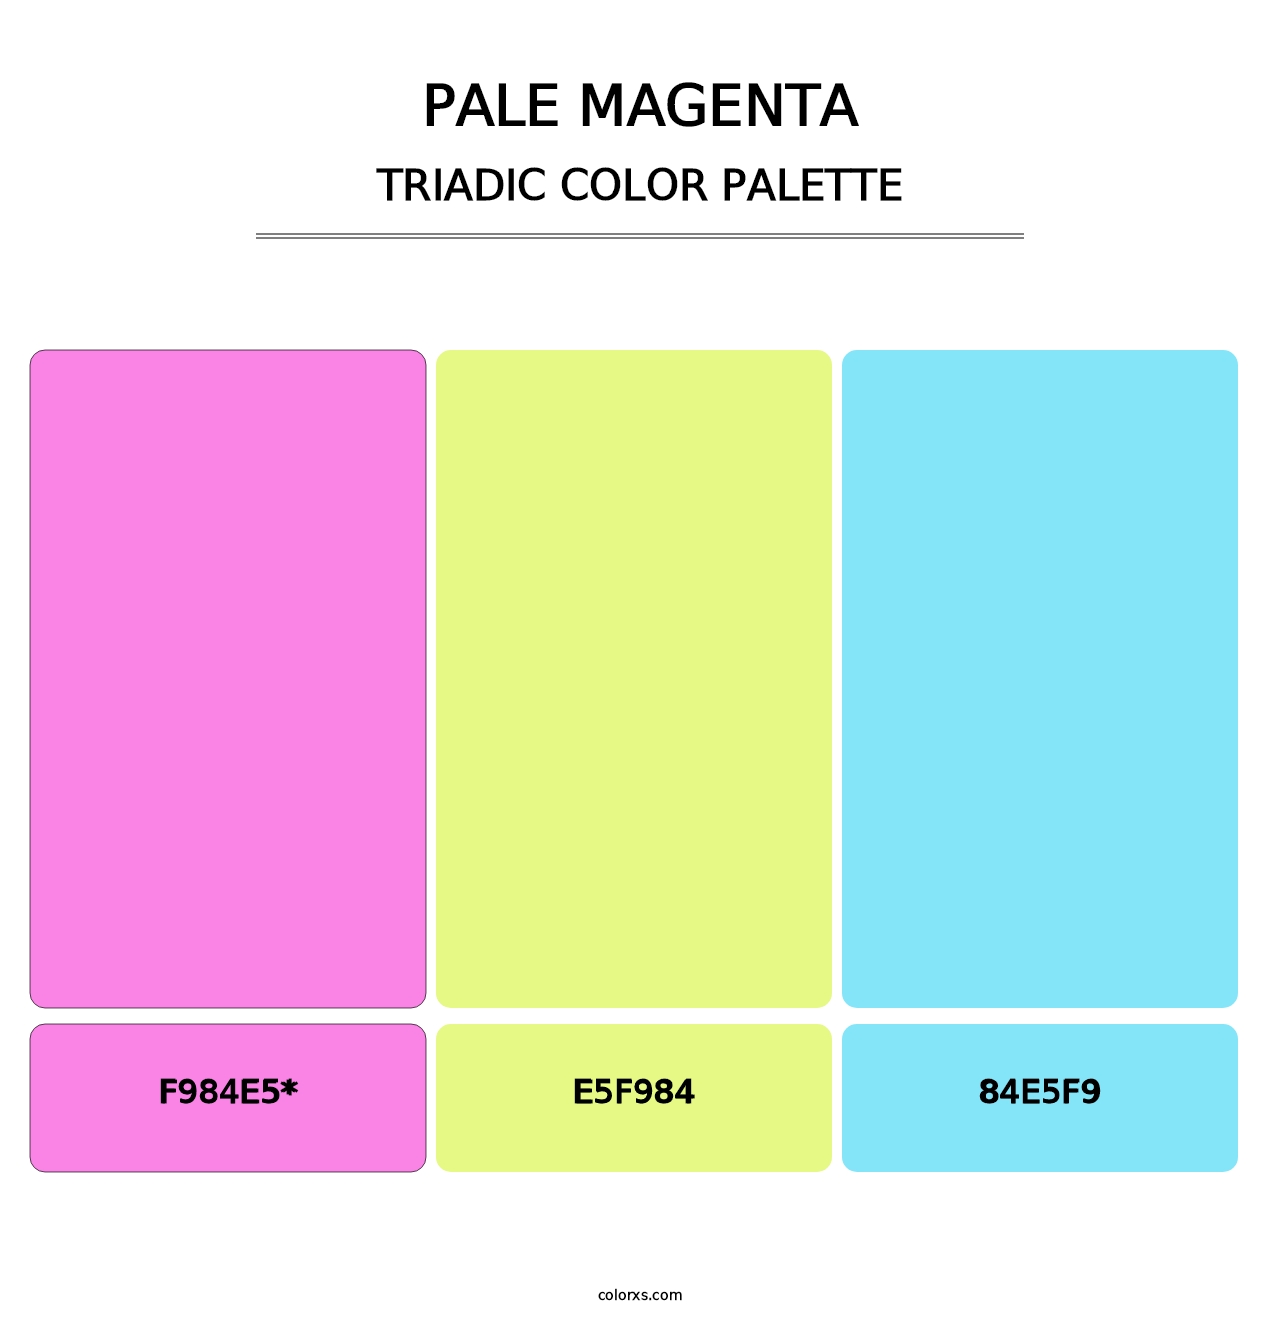 Pale Magenta - Triadic Color Palette